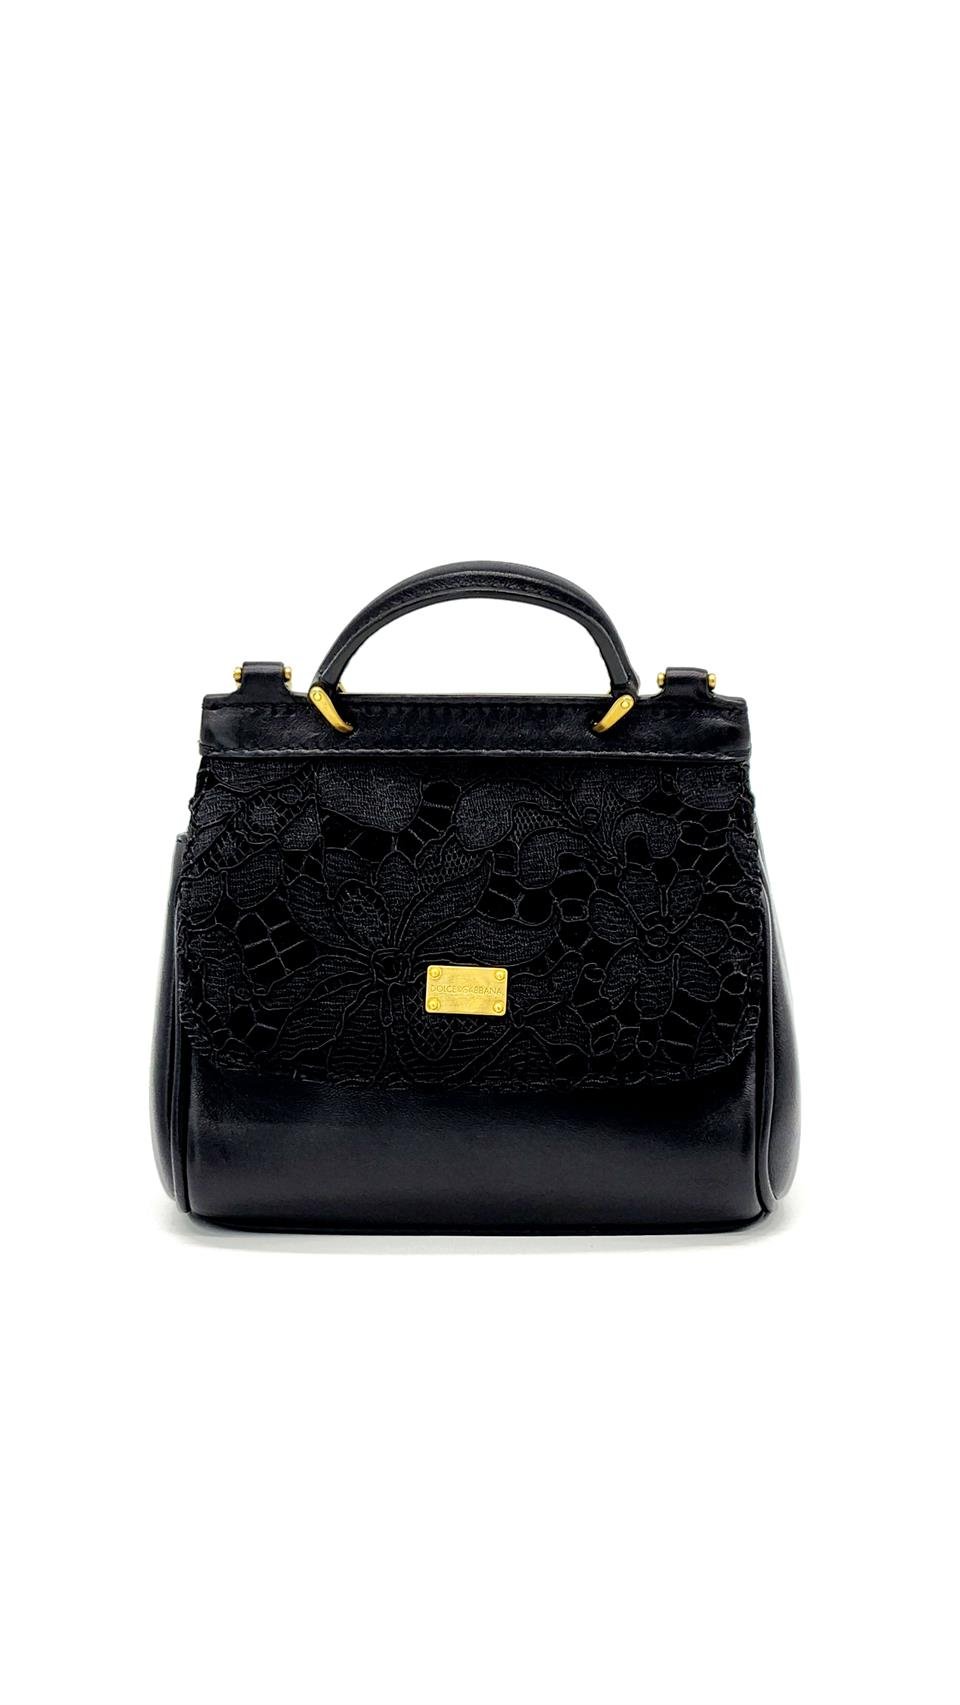 Dolce Gabbana Black Floral Mini Sicily Bag